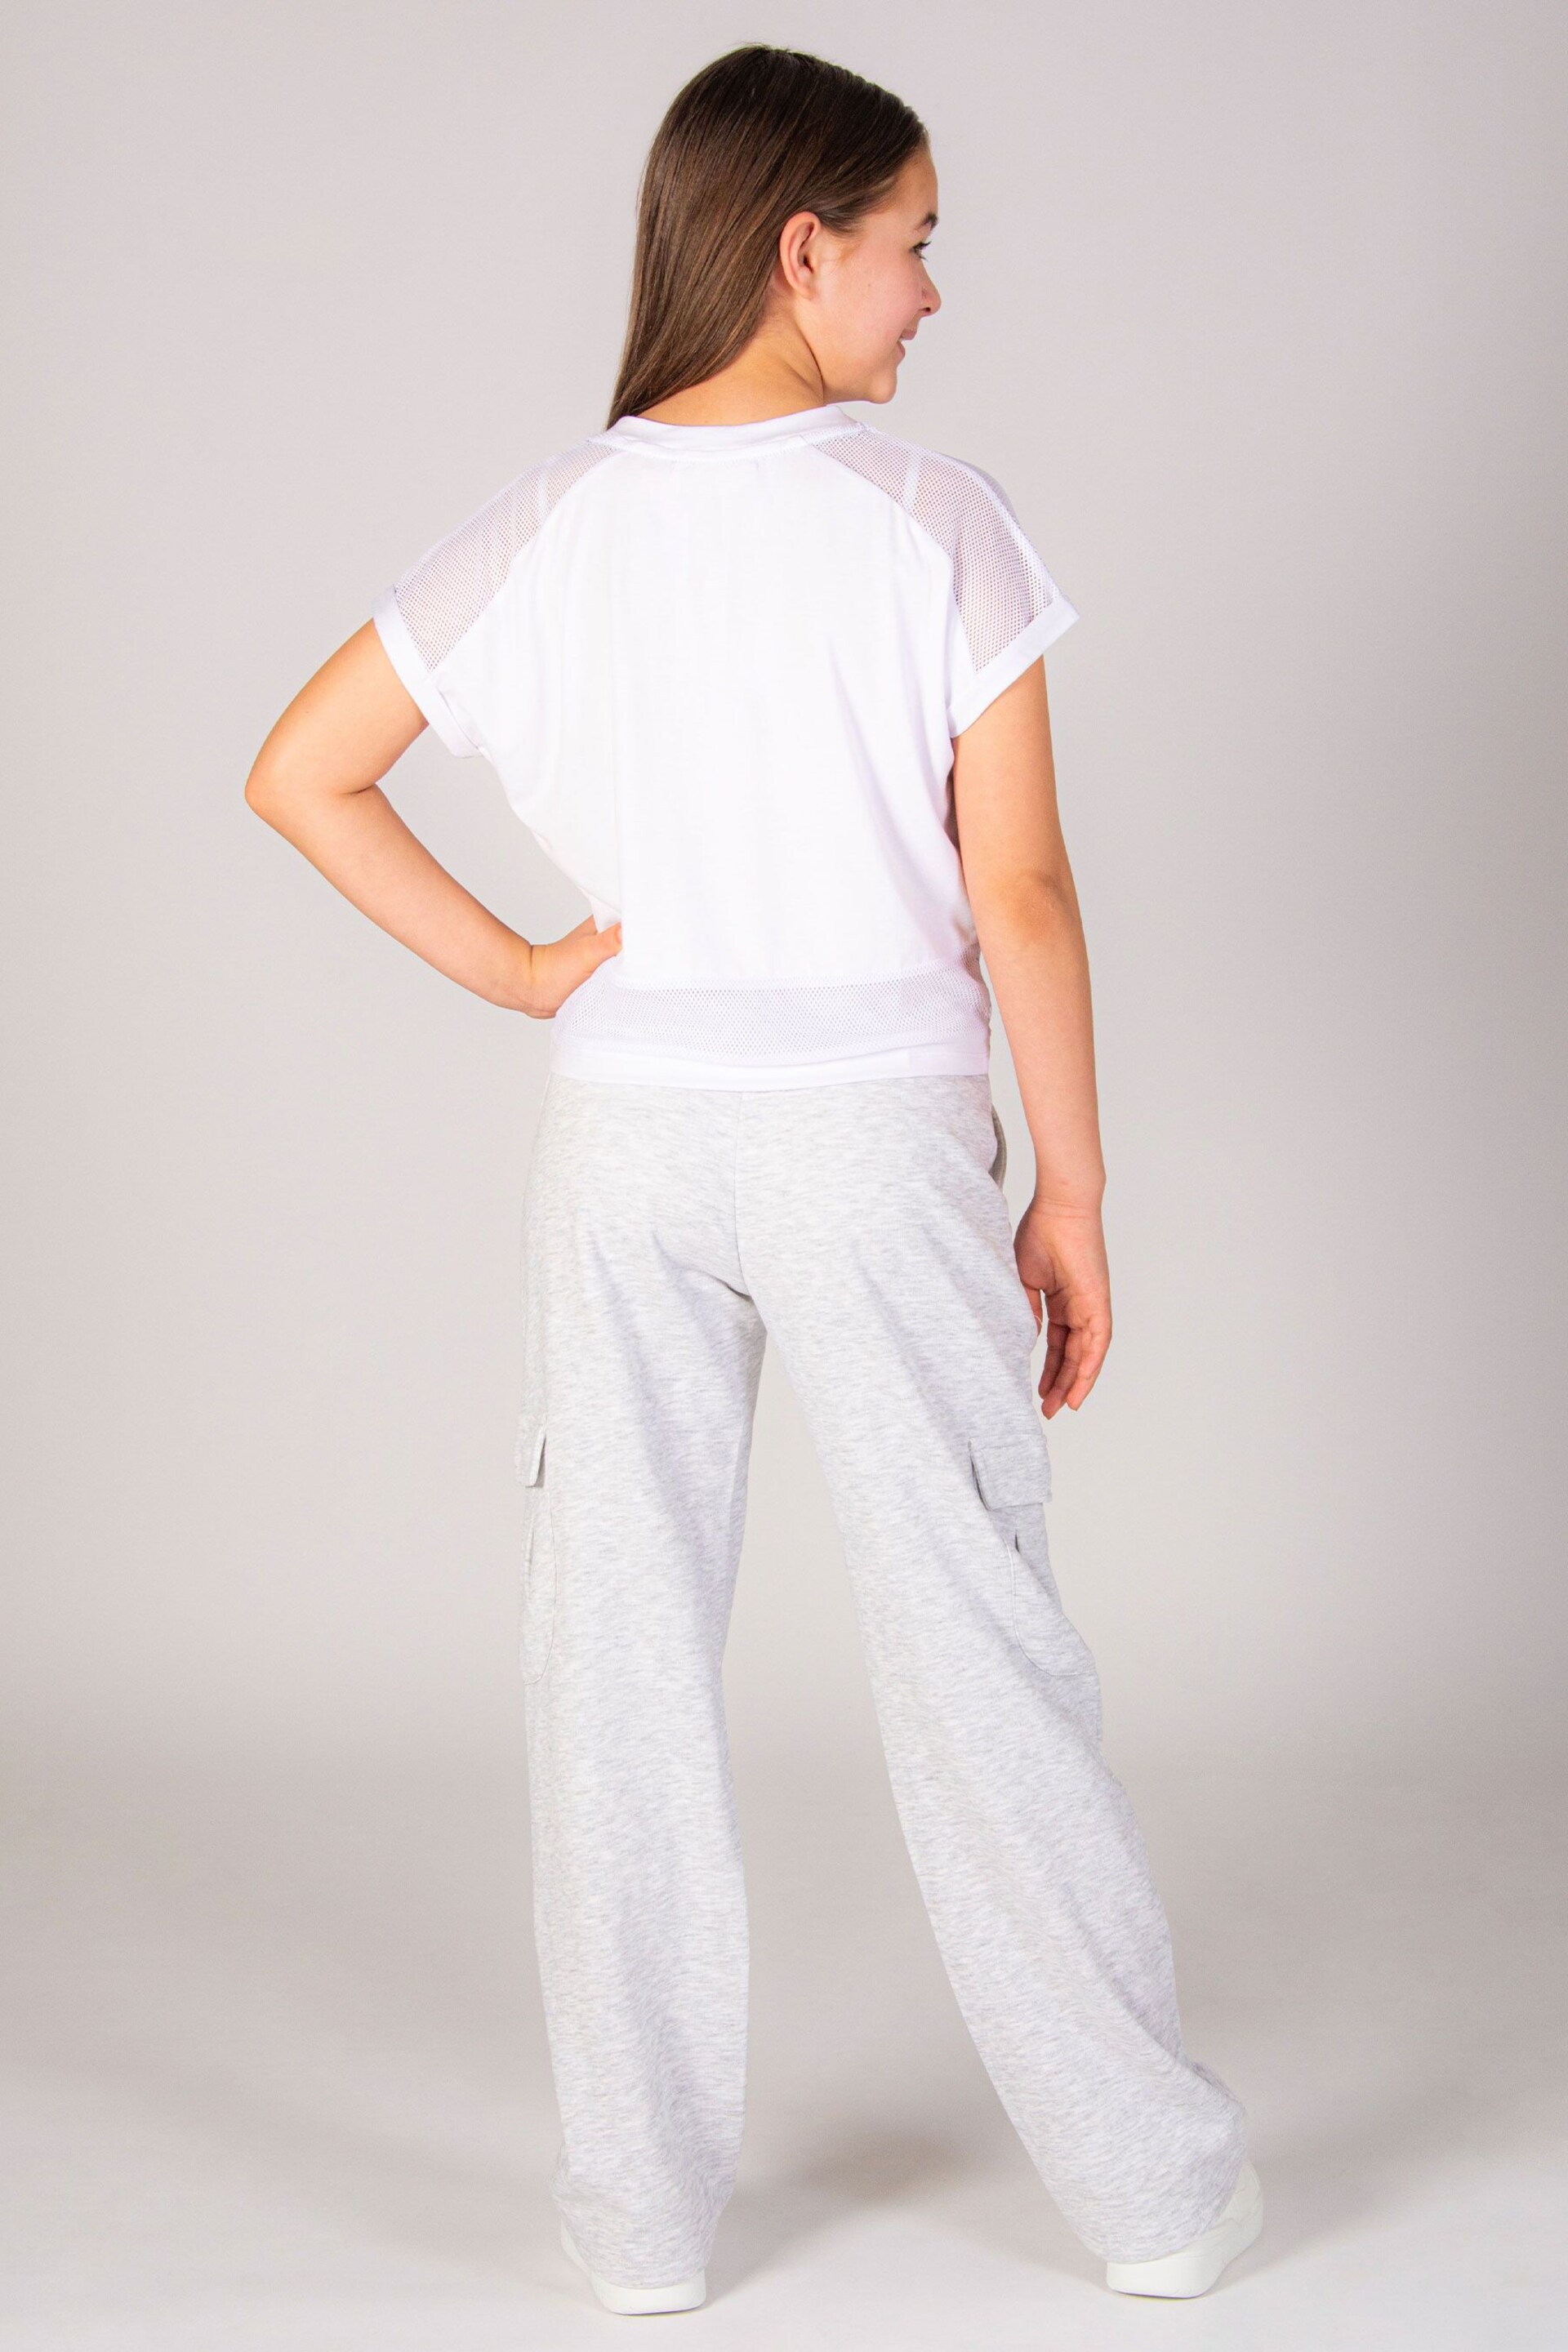 Pineapple White Dance Girls Crop T-Shirt - Image 4 of 6